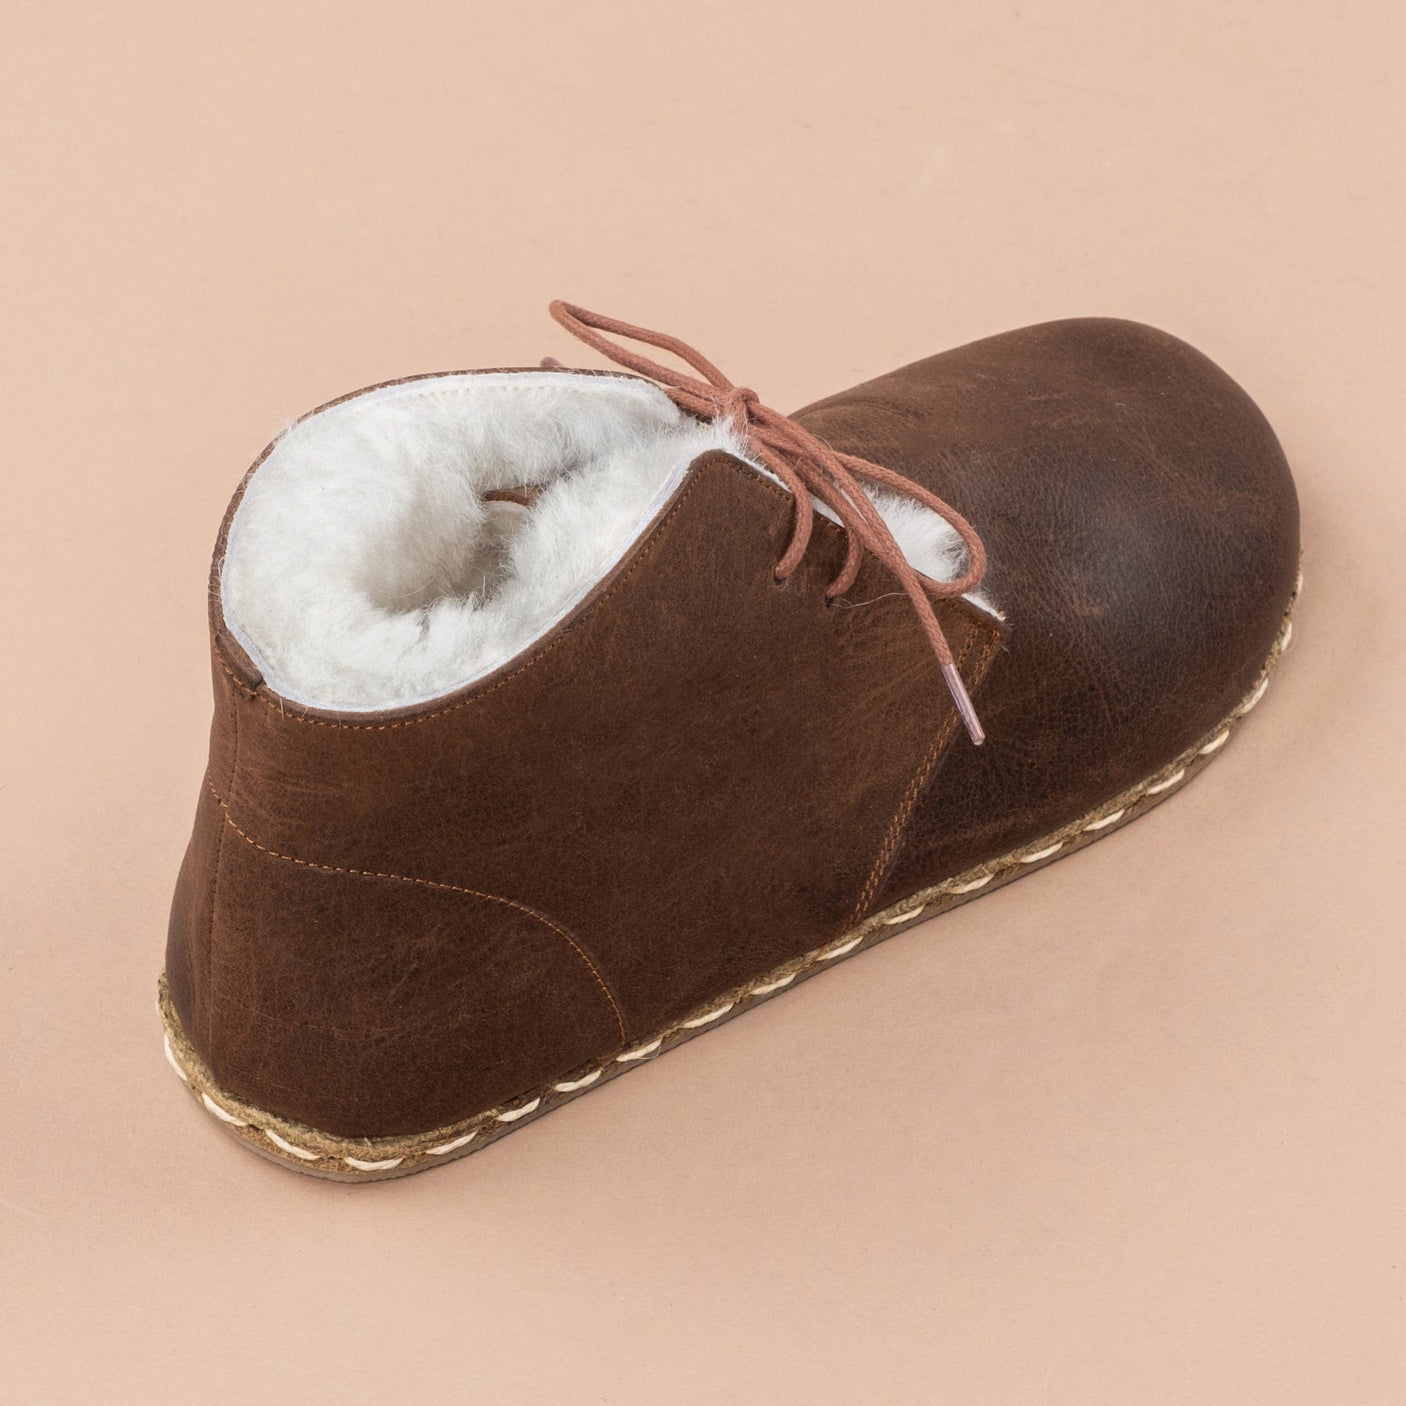 Kaffeefarbene Barfuß-Oxford-Stiefel für Damen mit Fell